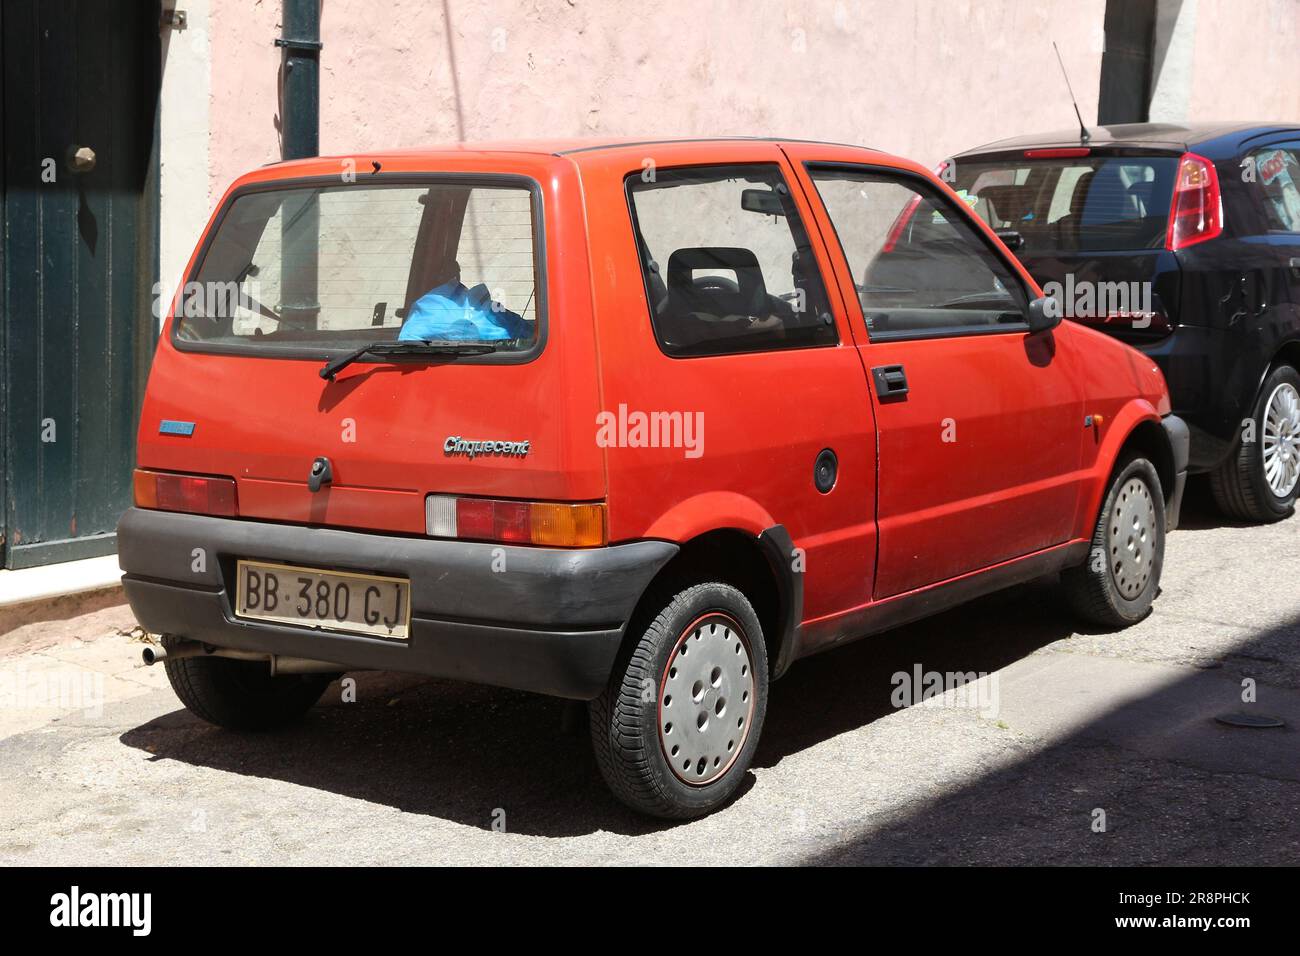 NARDO, ITALY - MAY 30, 2017: Fiat Cinquecento mini city car parked in a street in Nardo, Italy. There are 41 million motor vehicles registered in Ital Stock Photo